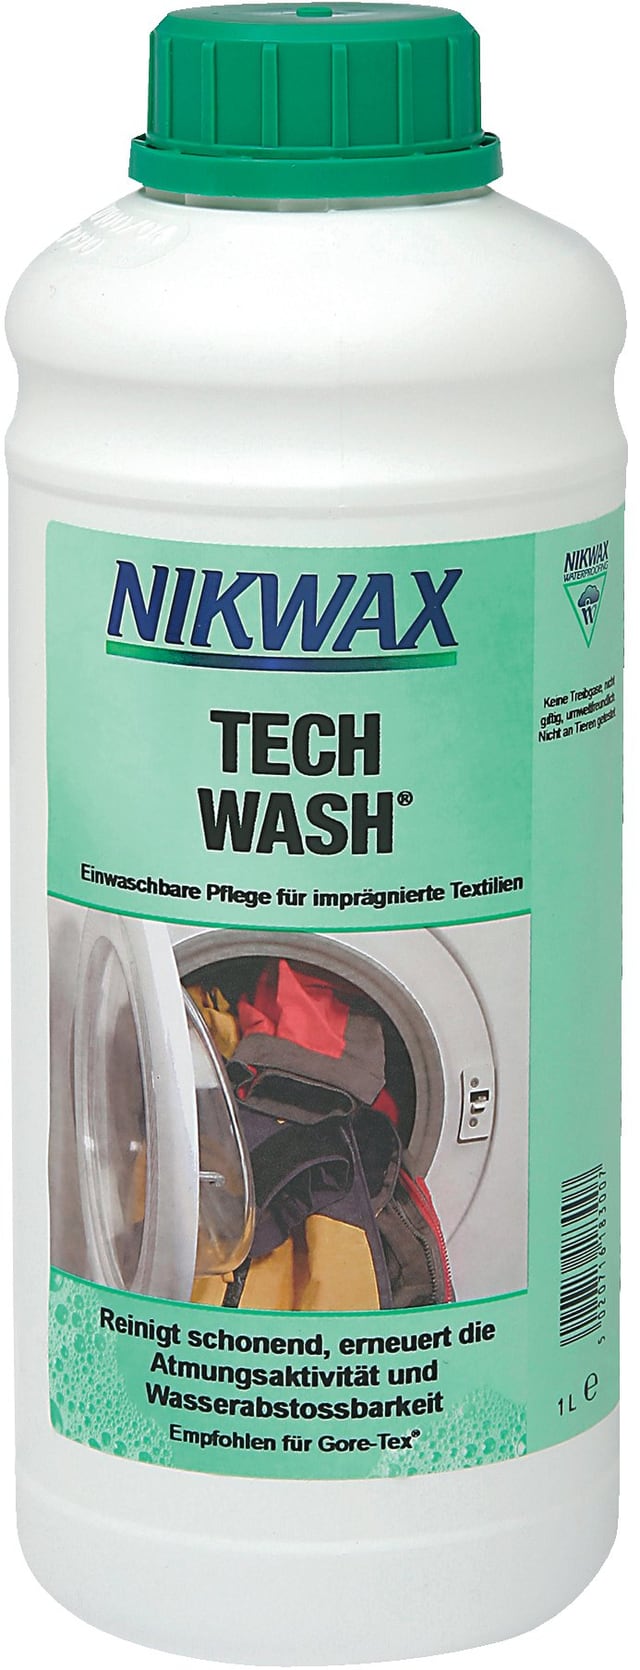 nikwax Tech Wash 1 Liter Lessive